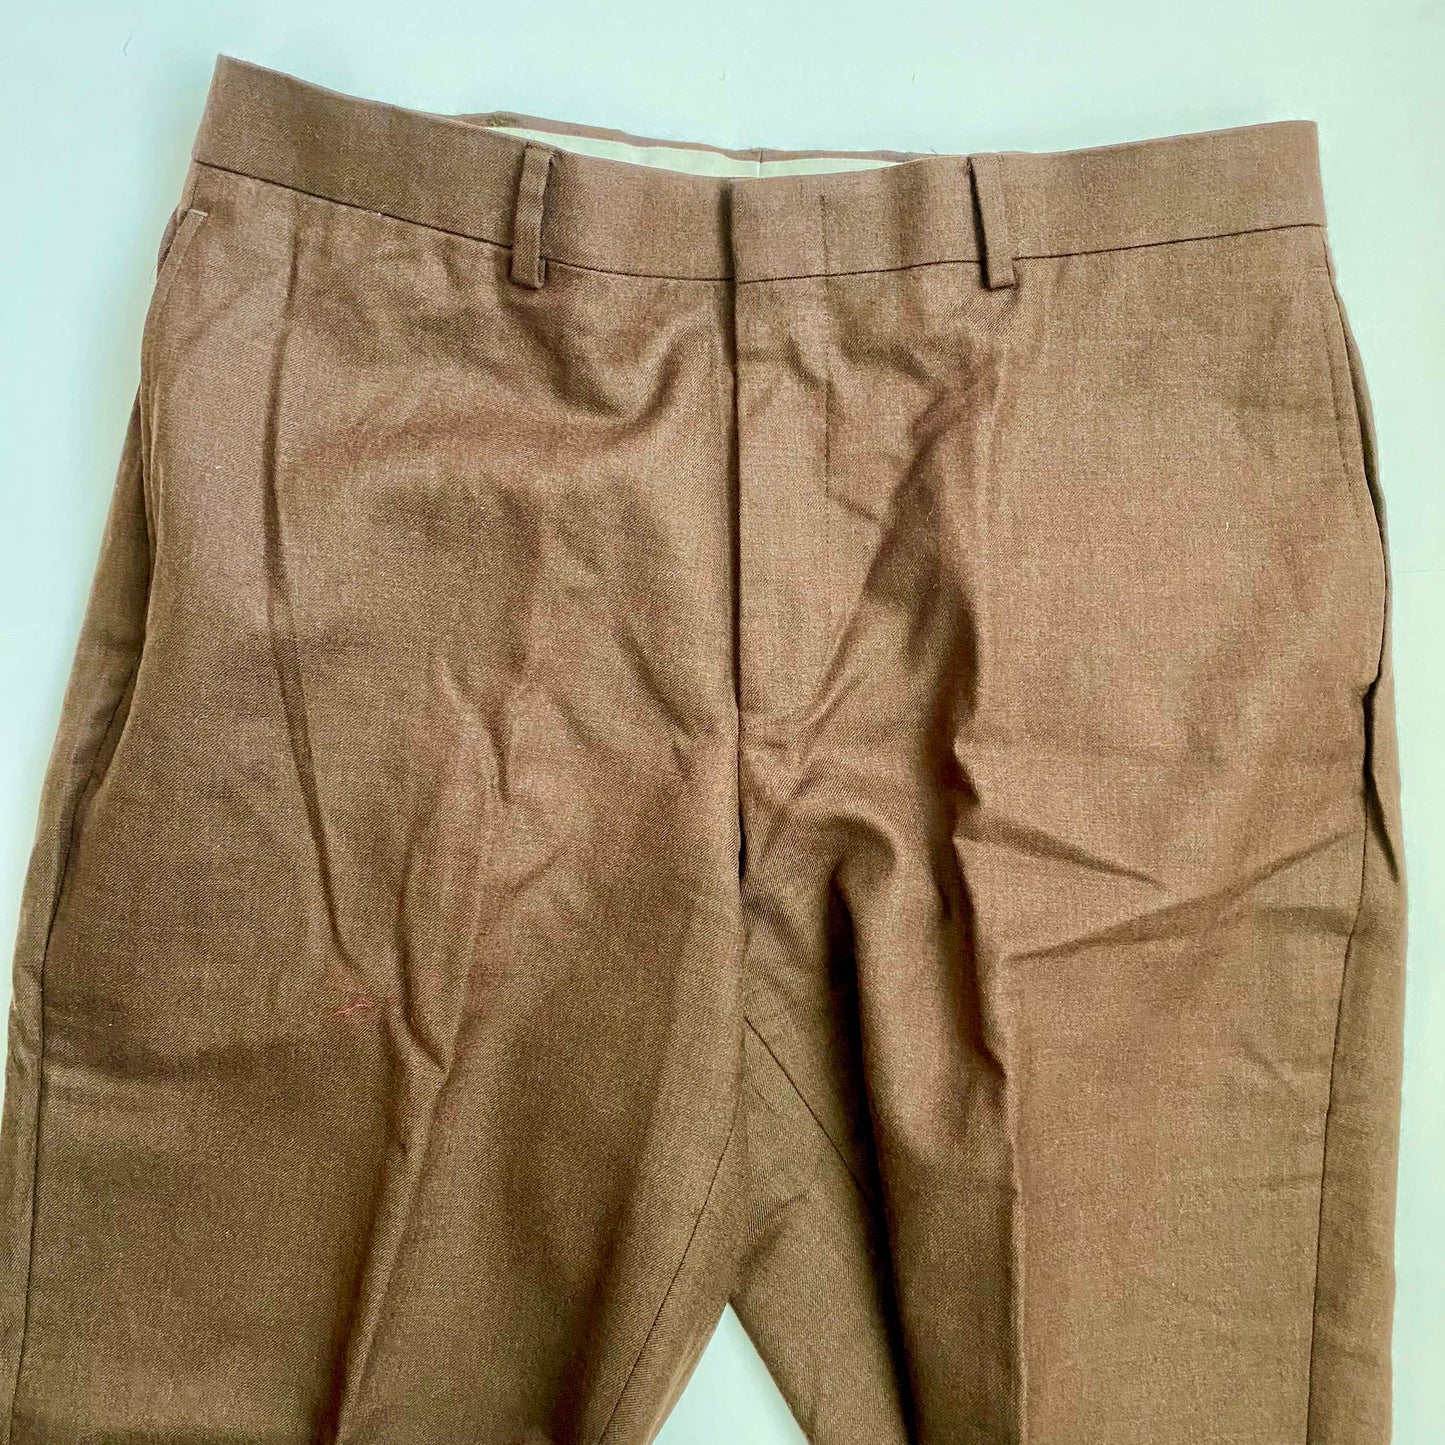 Nautica wool dress pants, 34W x 30L, Men's M